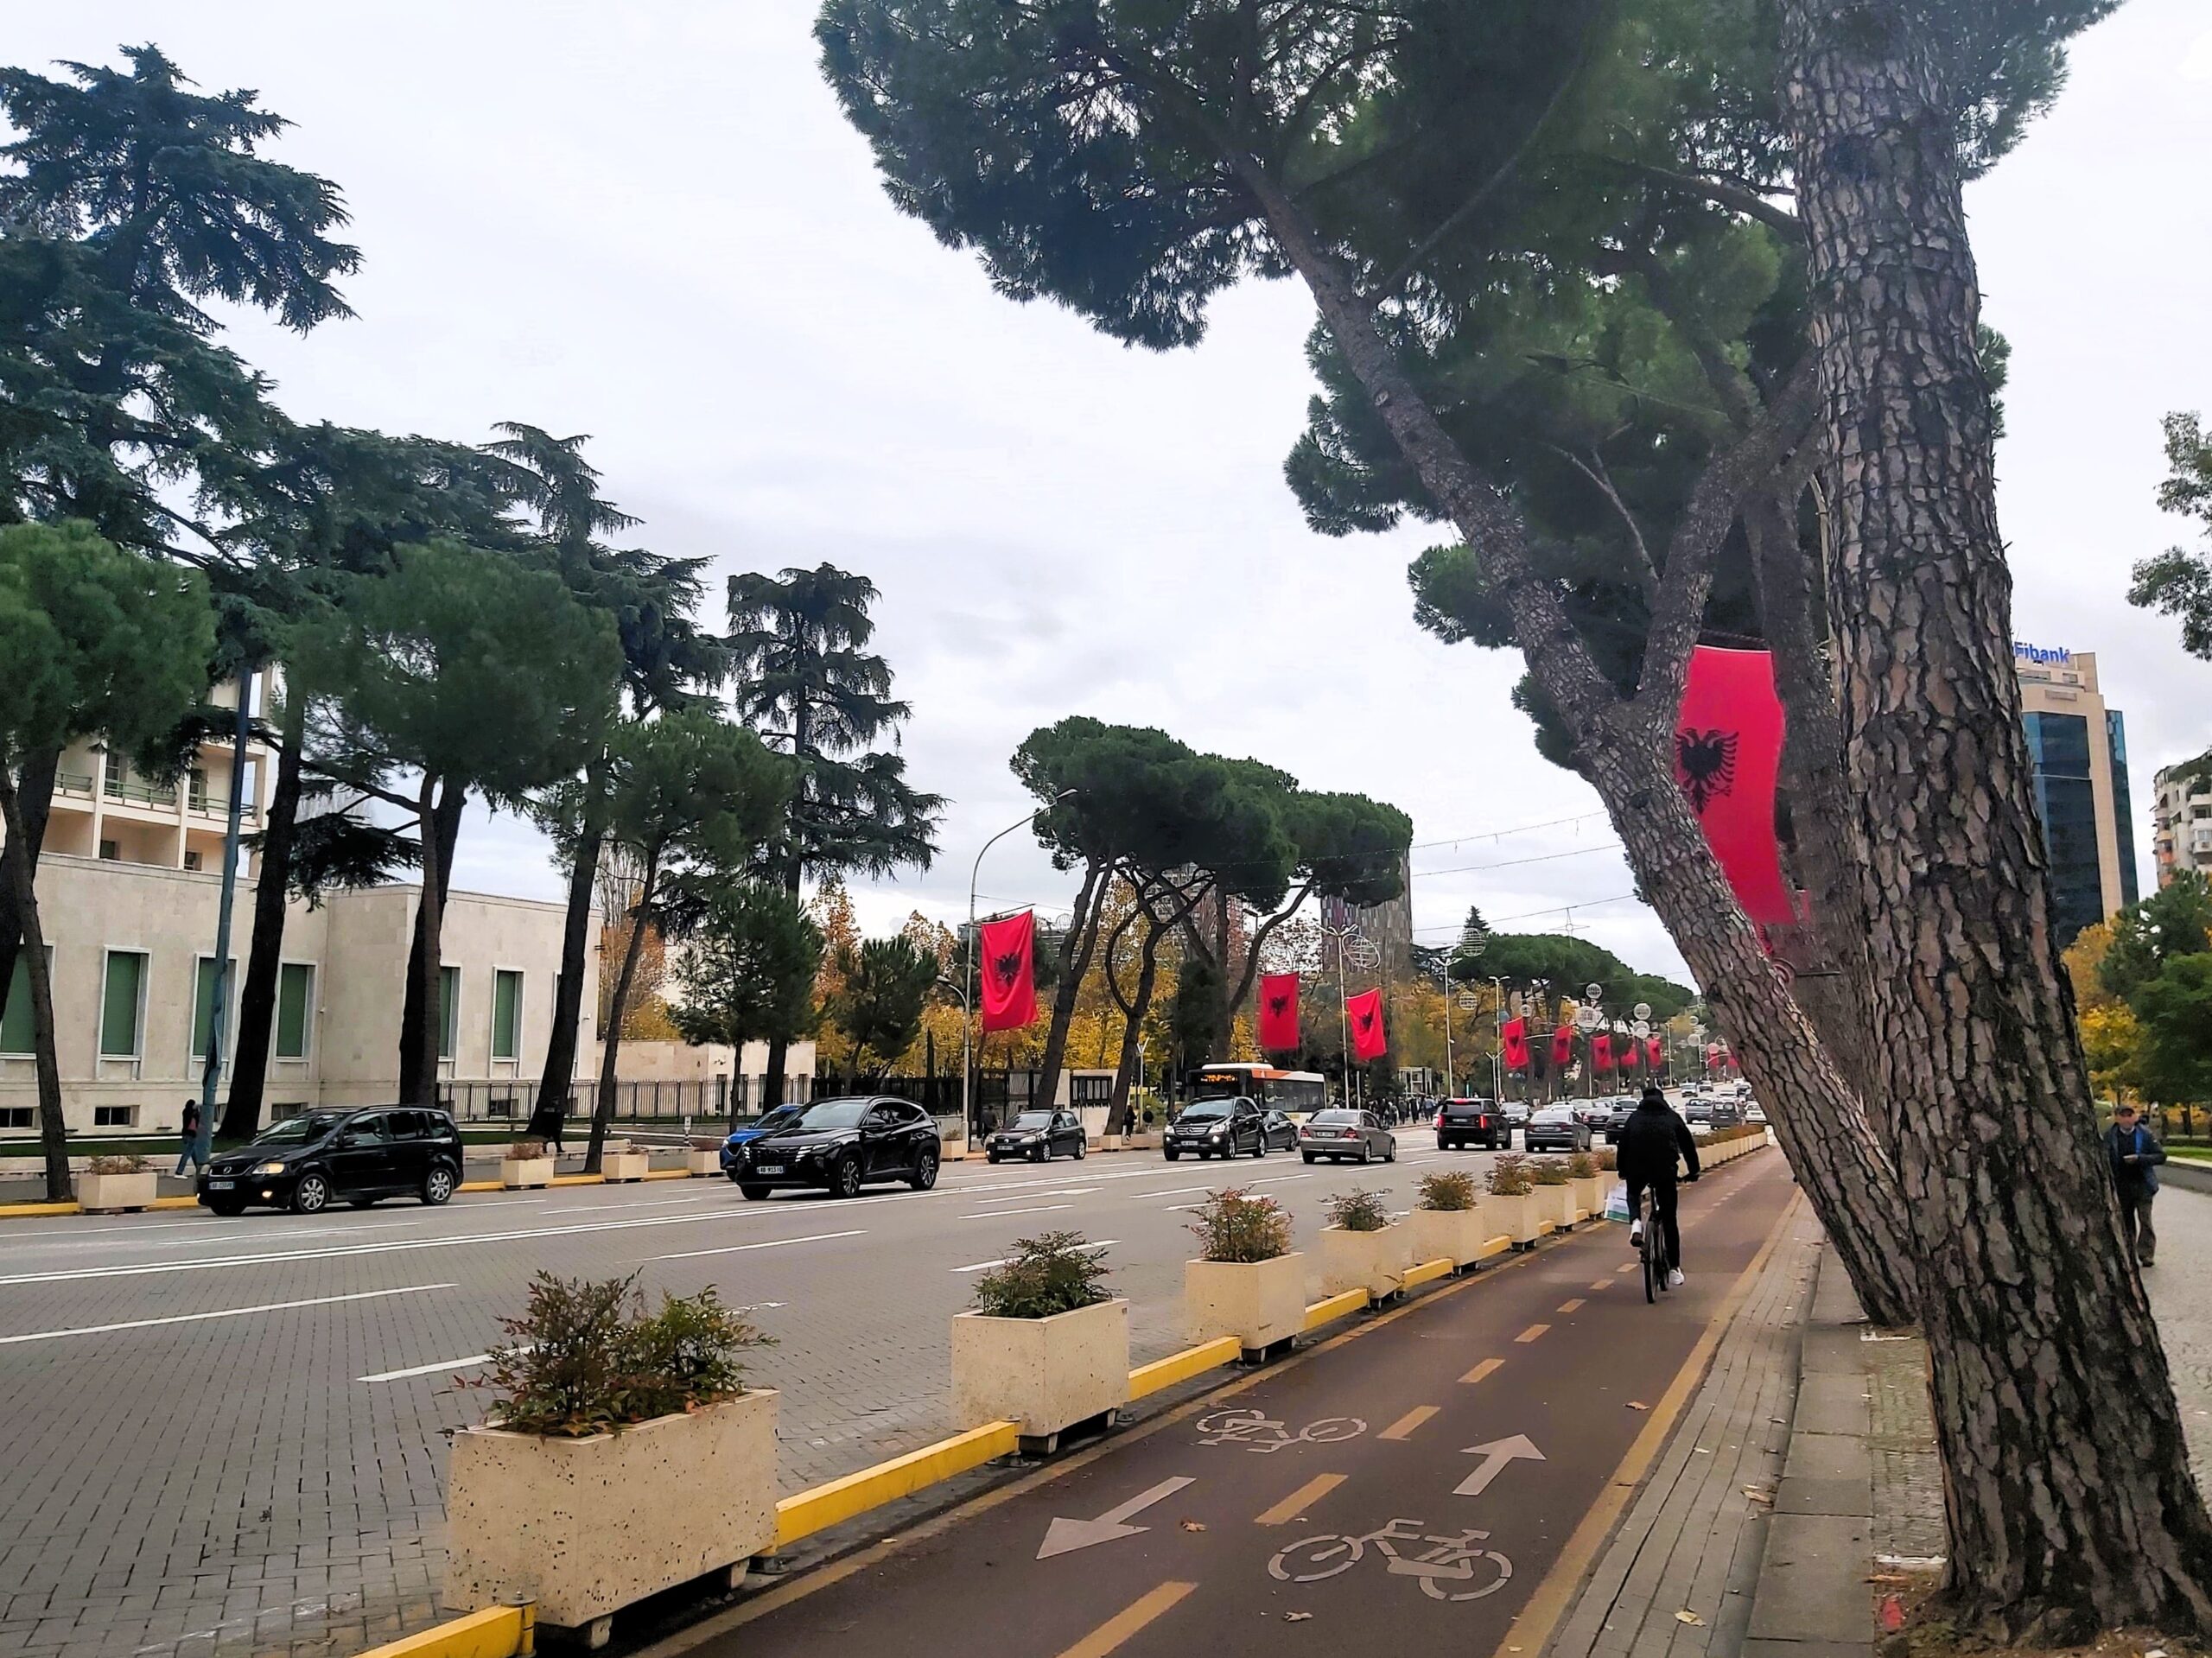 Albanian Flags lining the street in Tirana